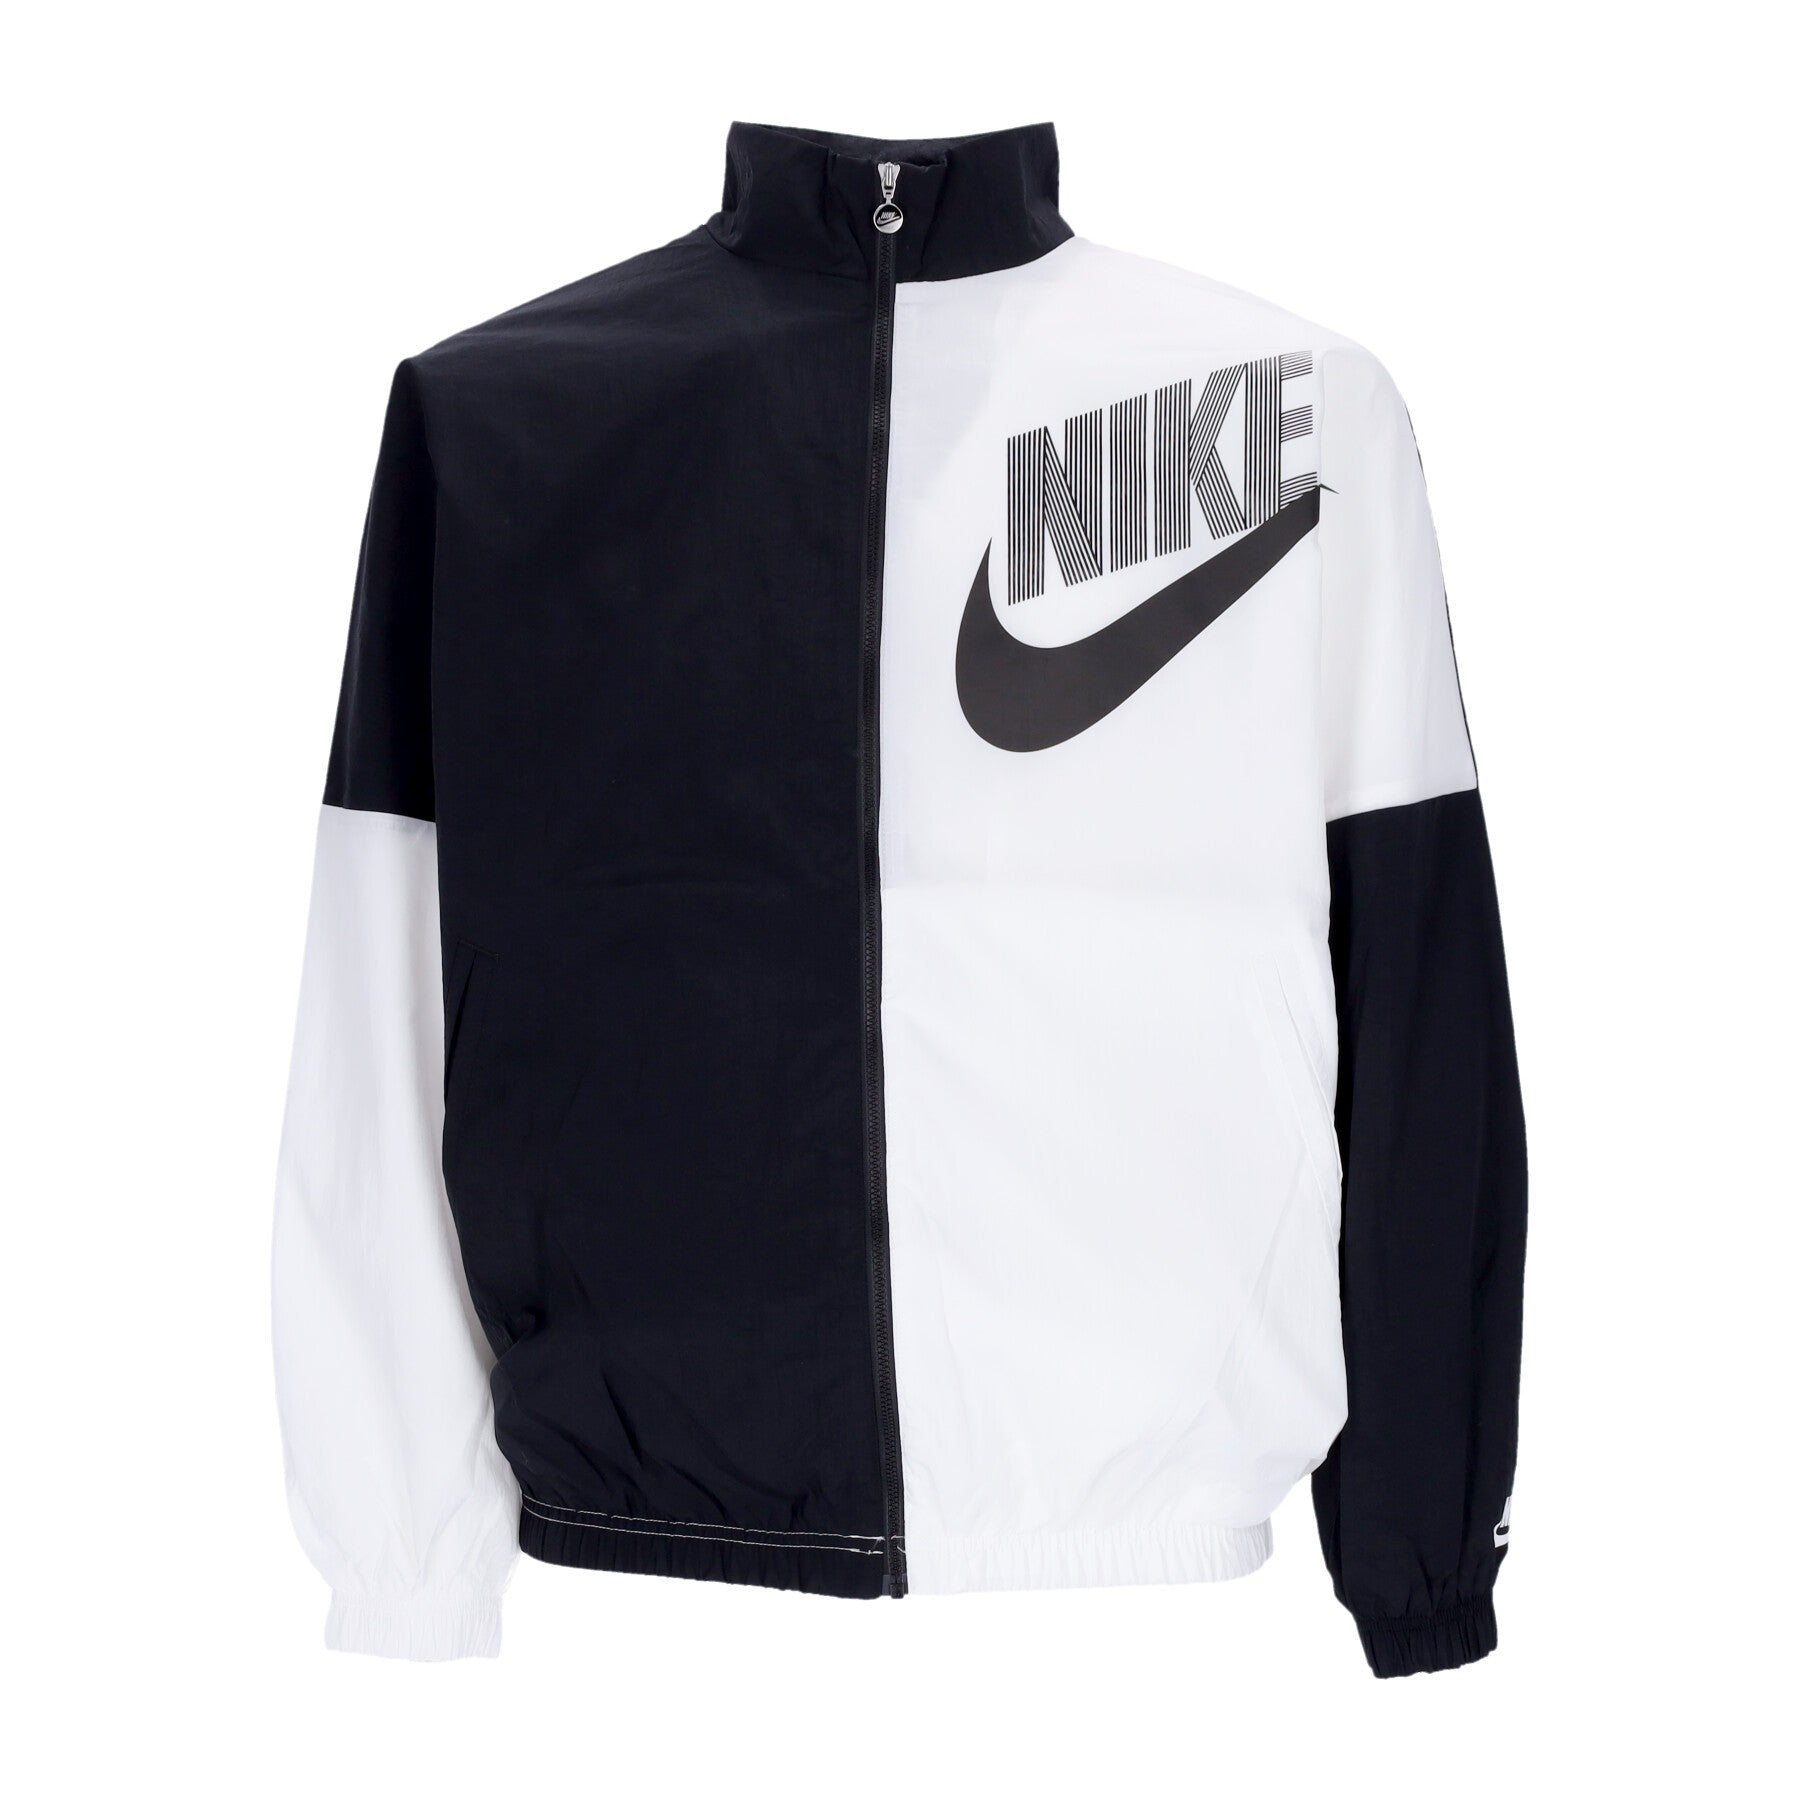 Nike, Giacca Tuta Donna Sportswear Woven Dance Jacket, Black/white